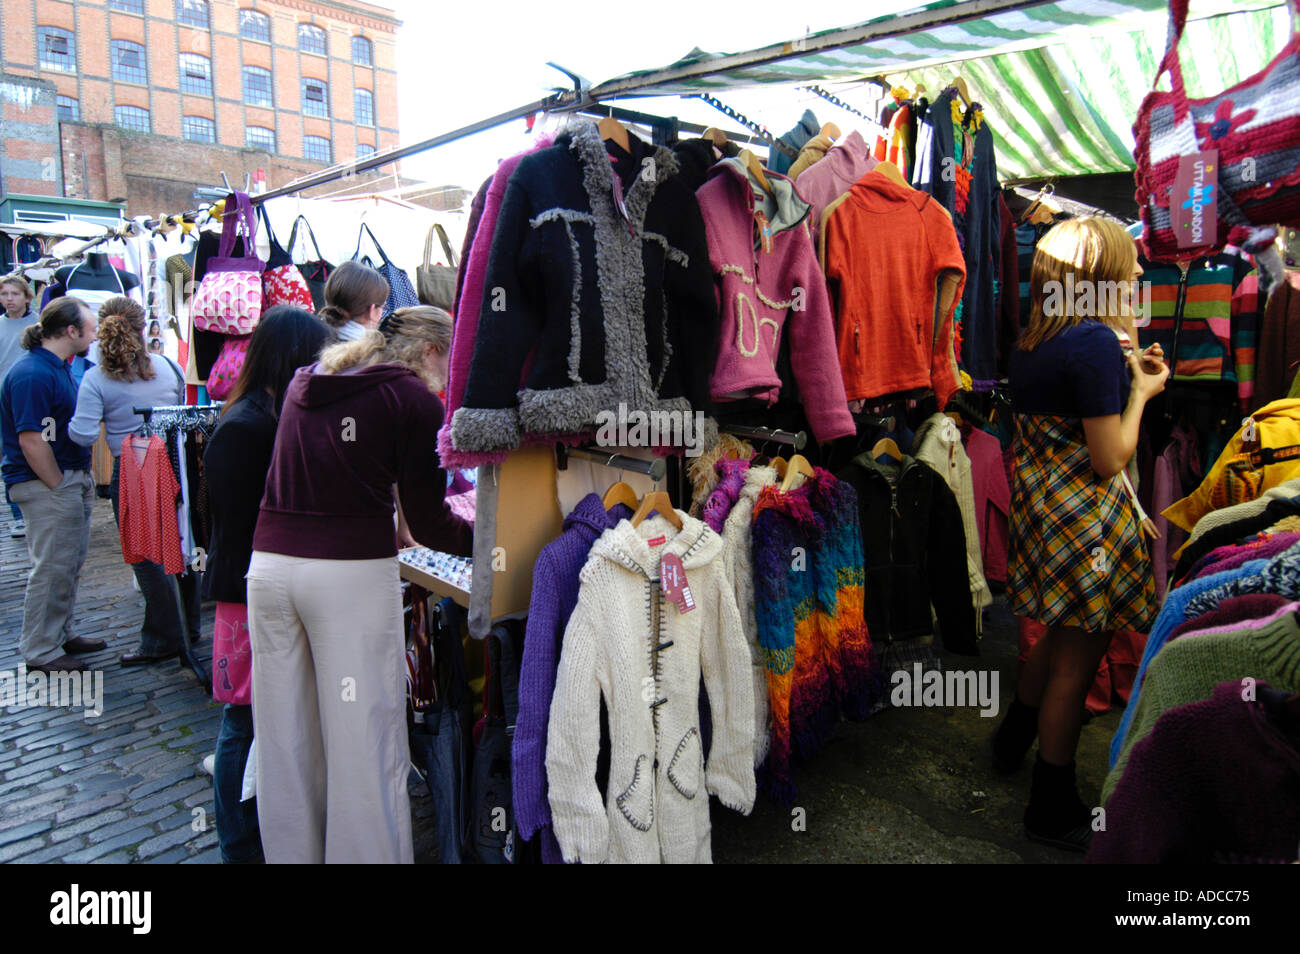 Clothes stall at Camden Market London England UK Stock Photo